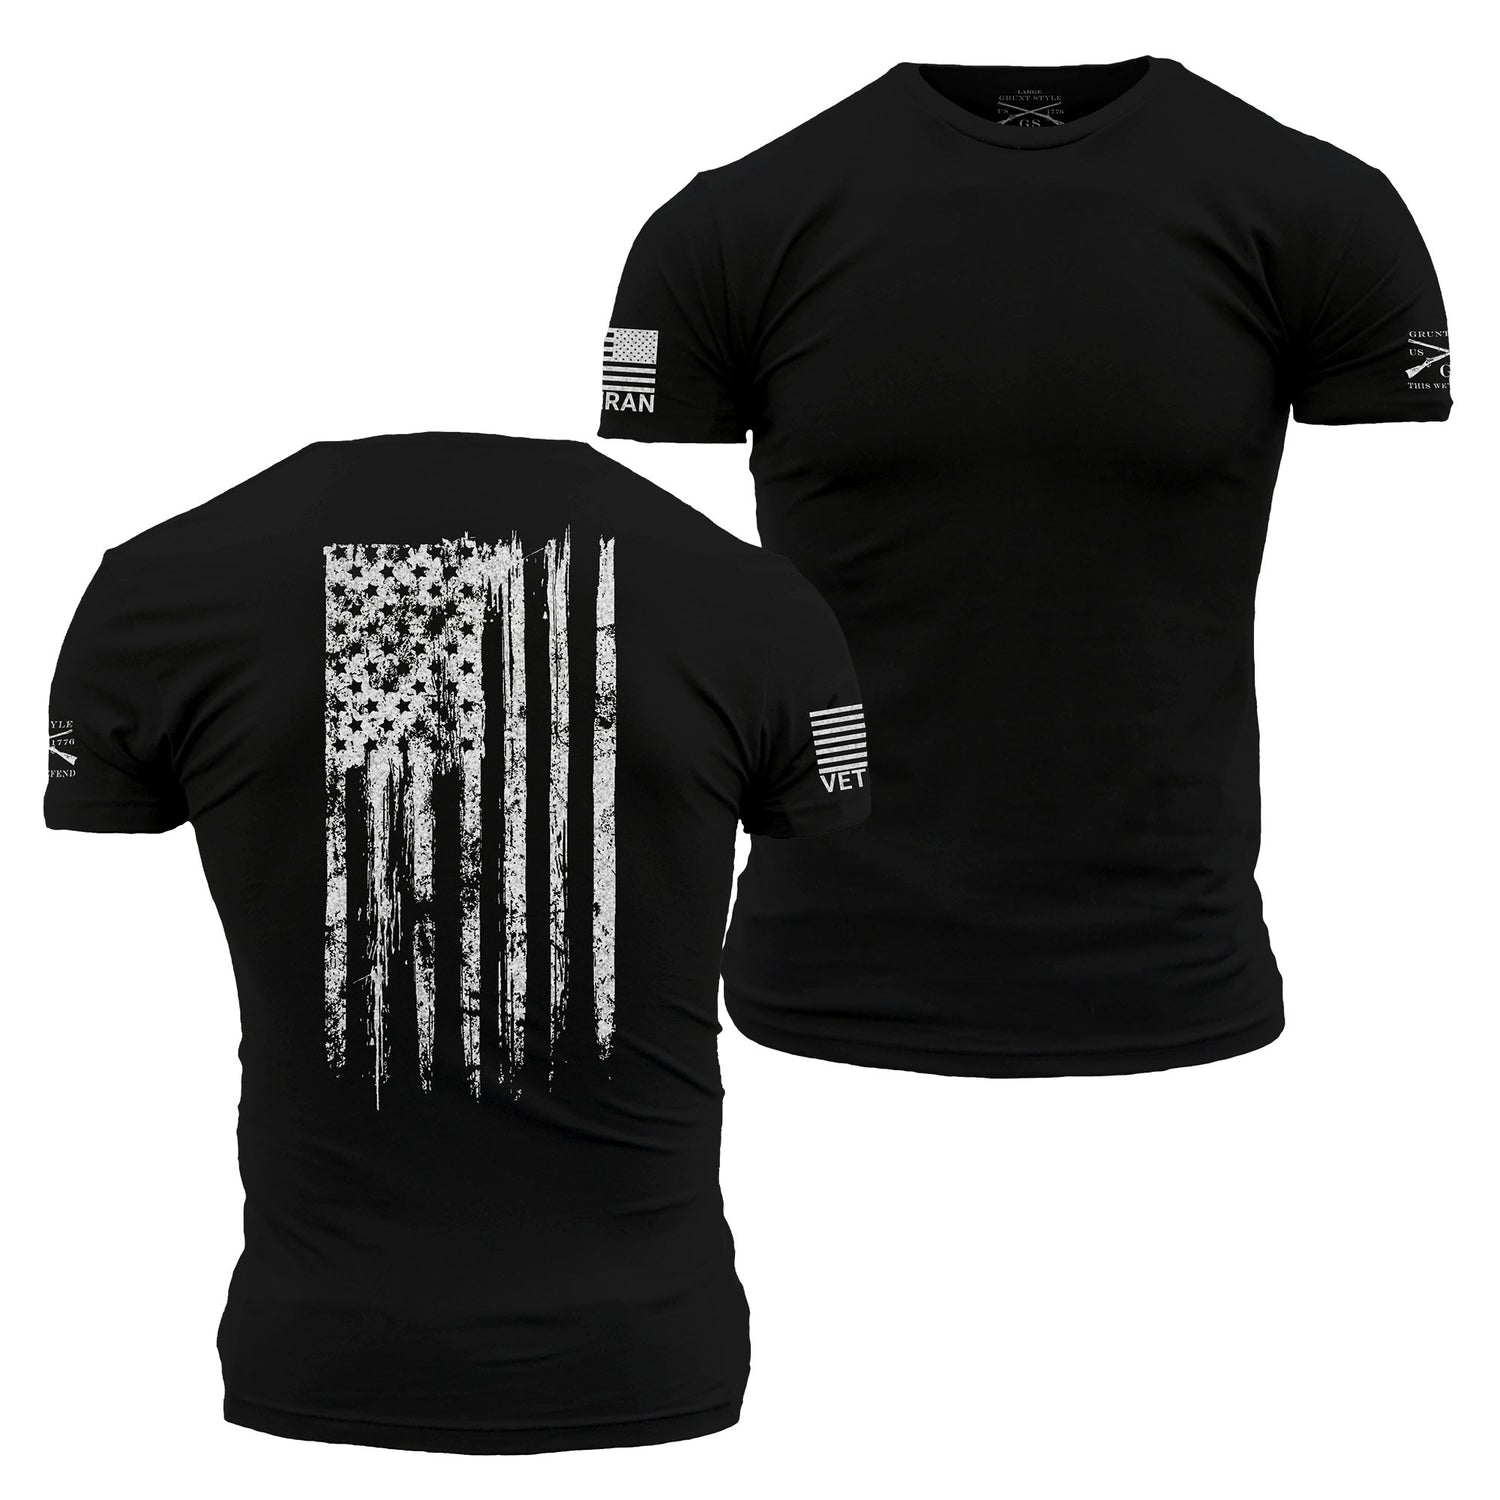 veteran shirts - t-shirt bundle